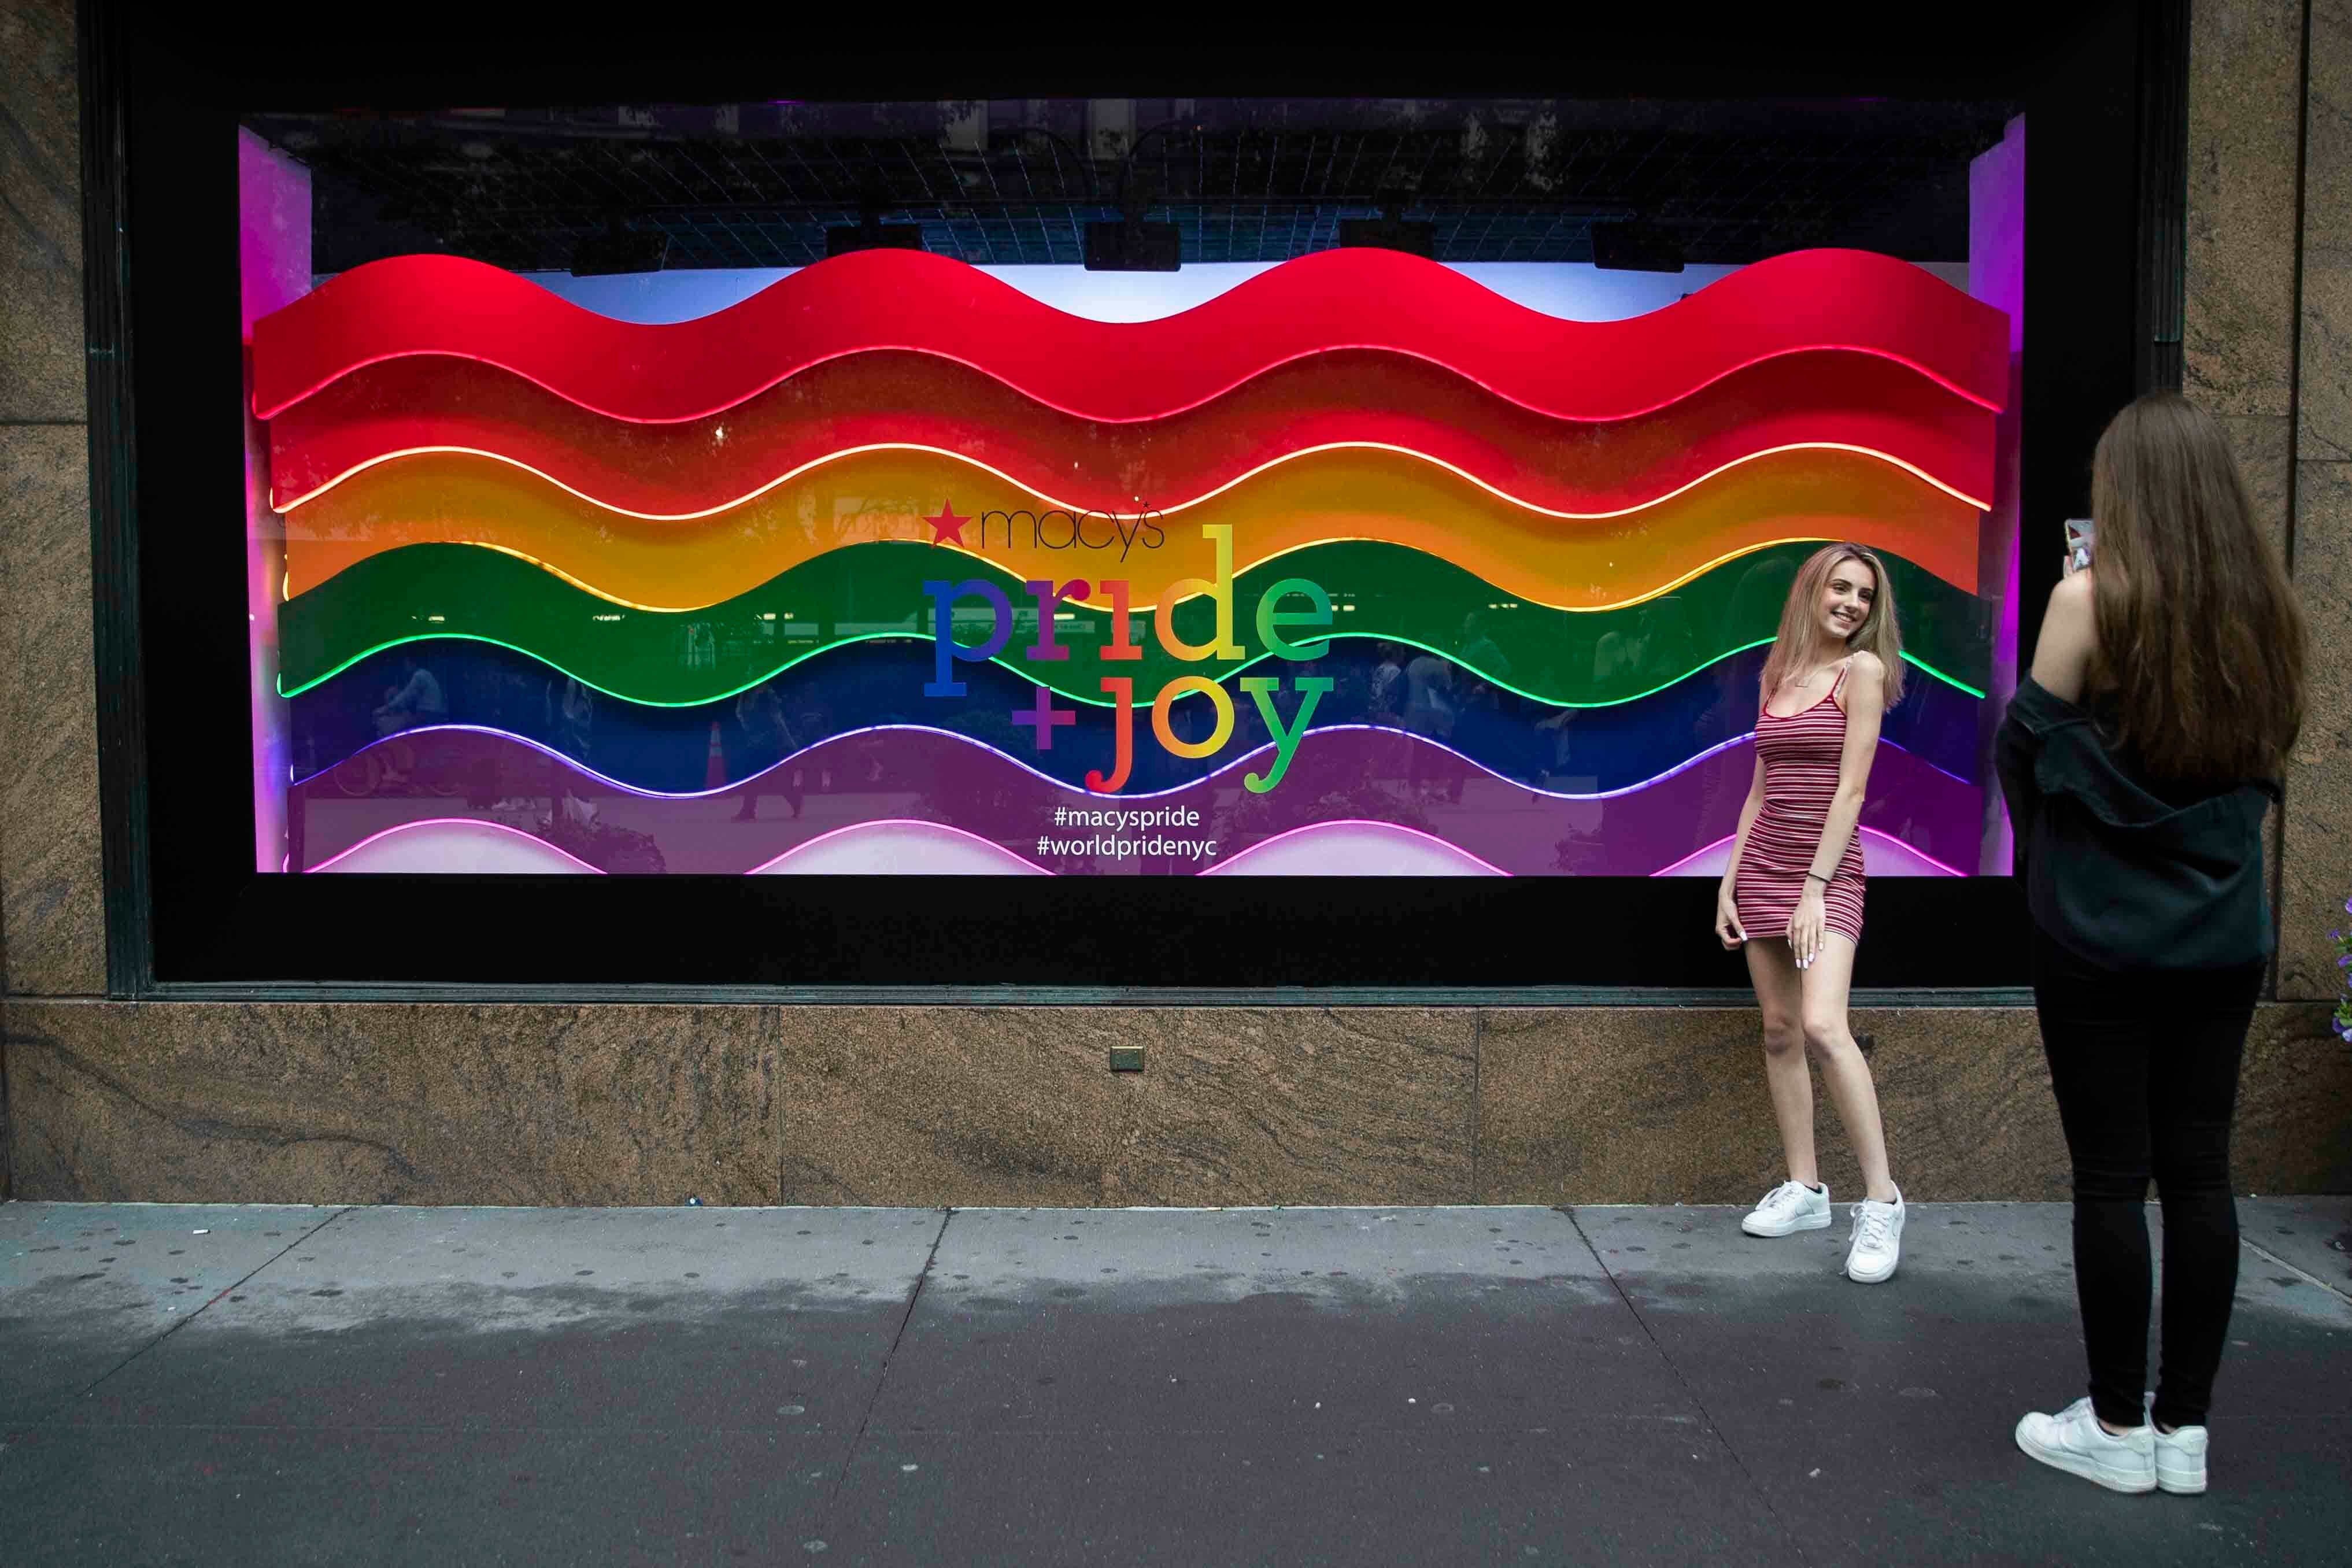 A retail rainbow: Vendors mark LGBTQ Pride on sales racks - WHYY